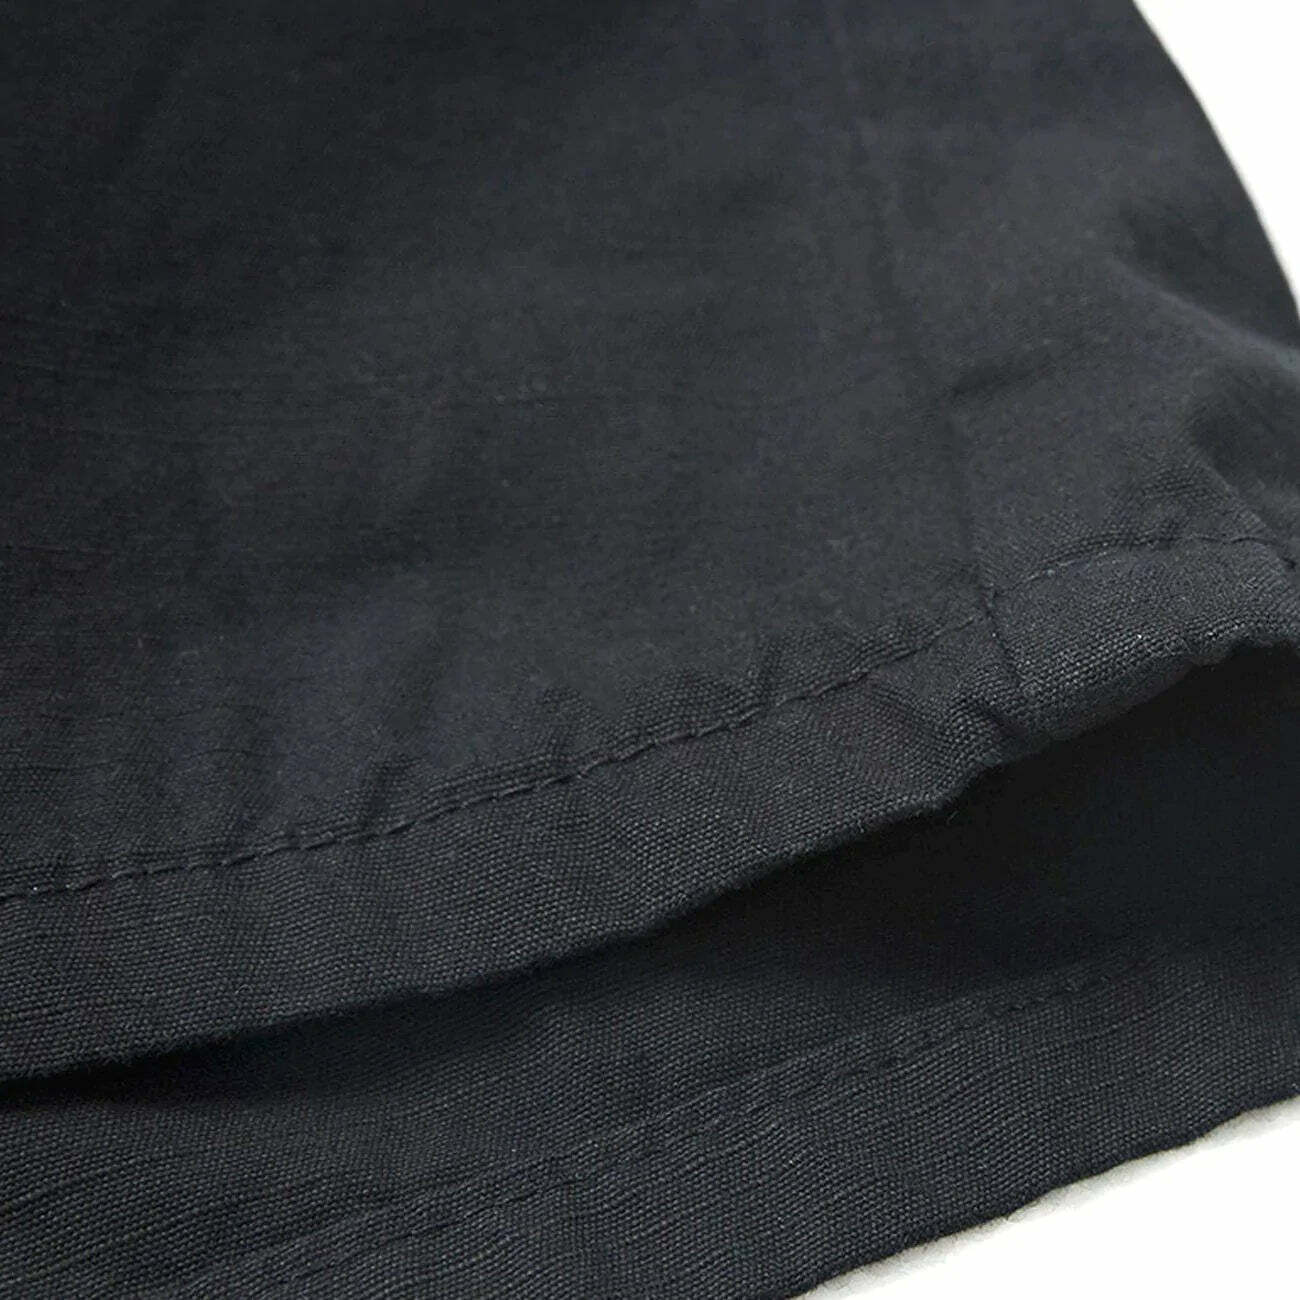 sleek pocket simple shorts urban streetwear essential 1483